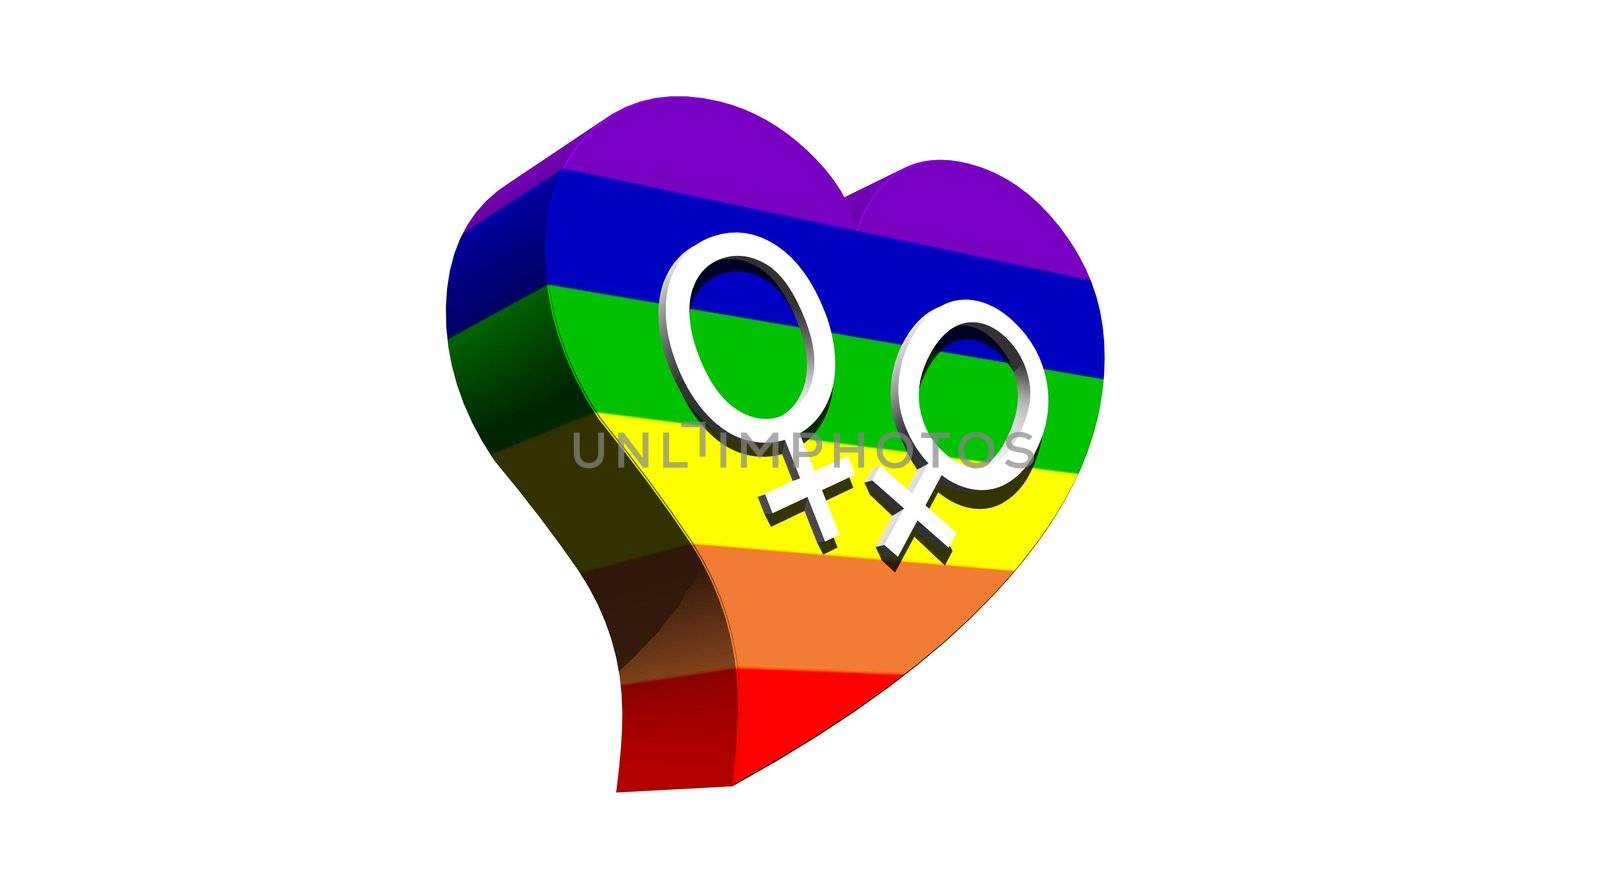 Lesbian couple in rainbow color heart by Elenaphotos21